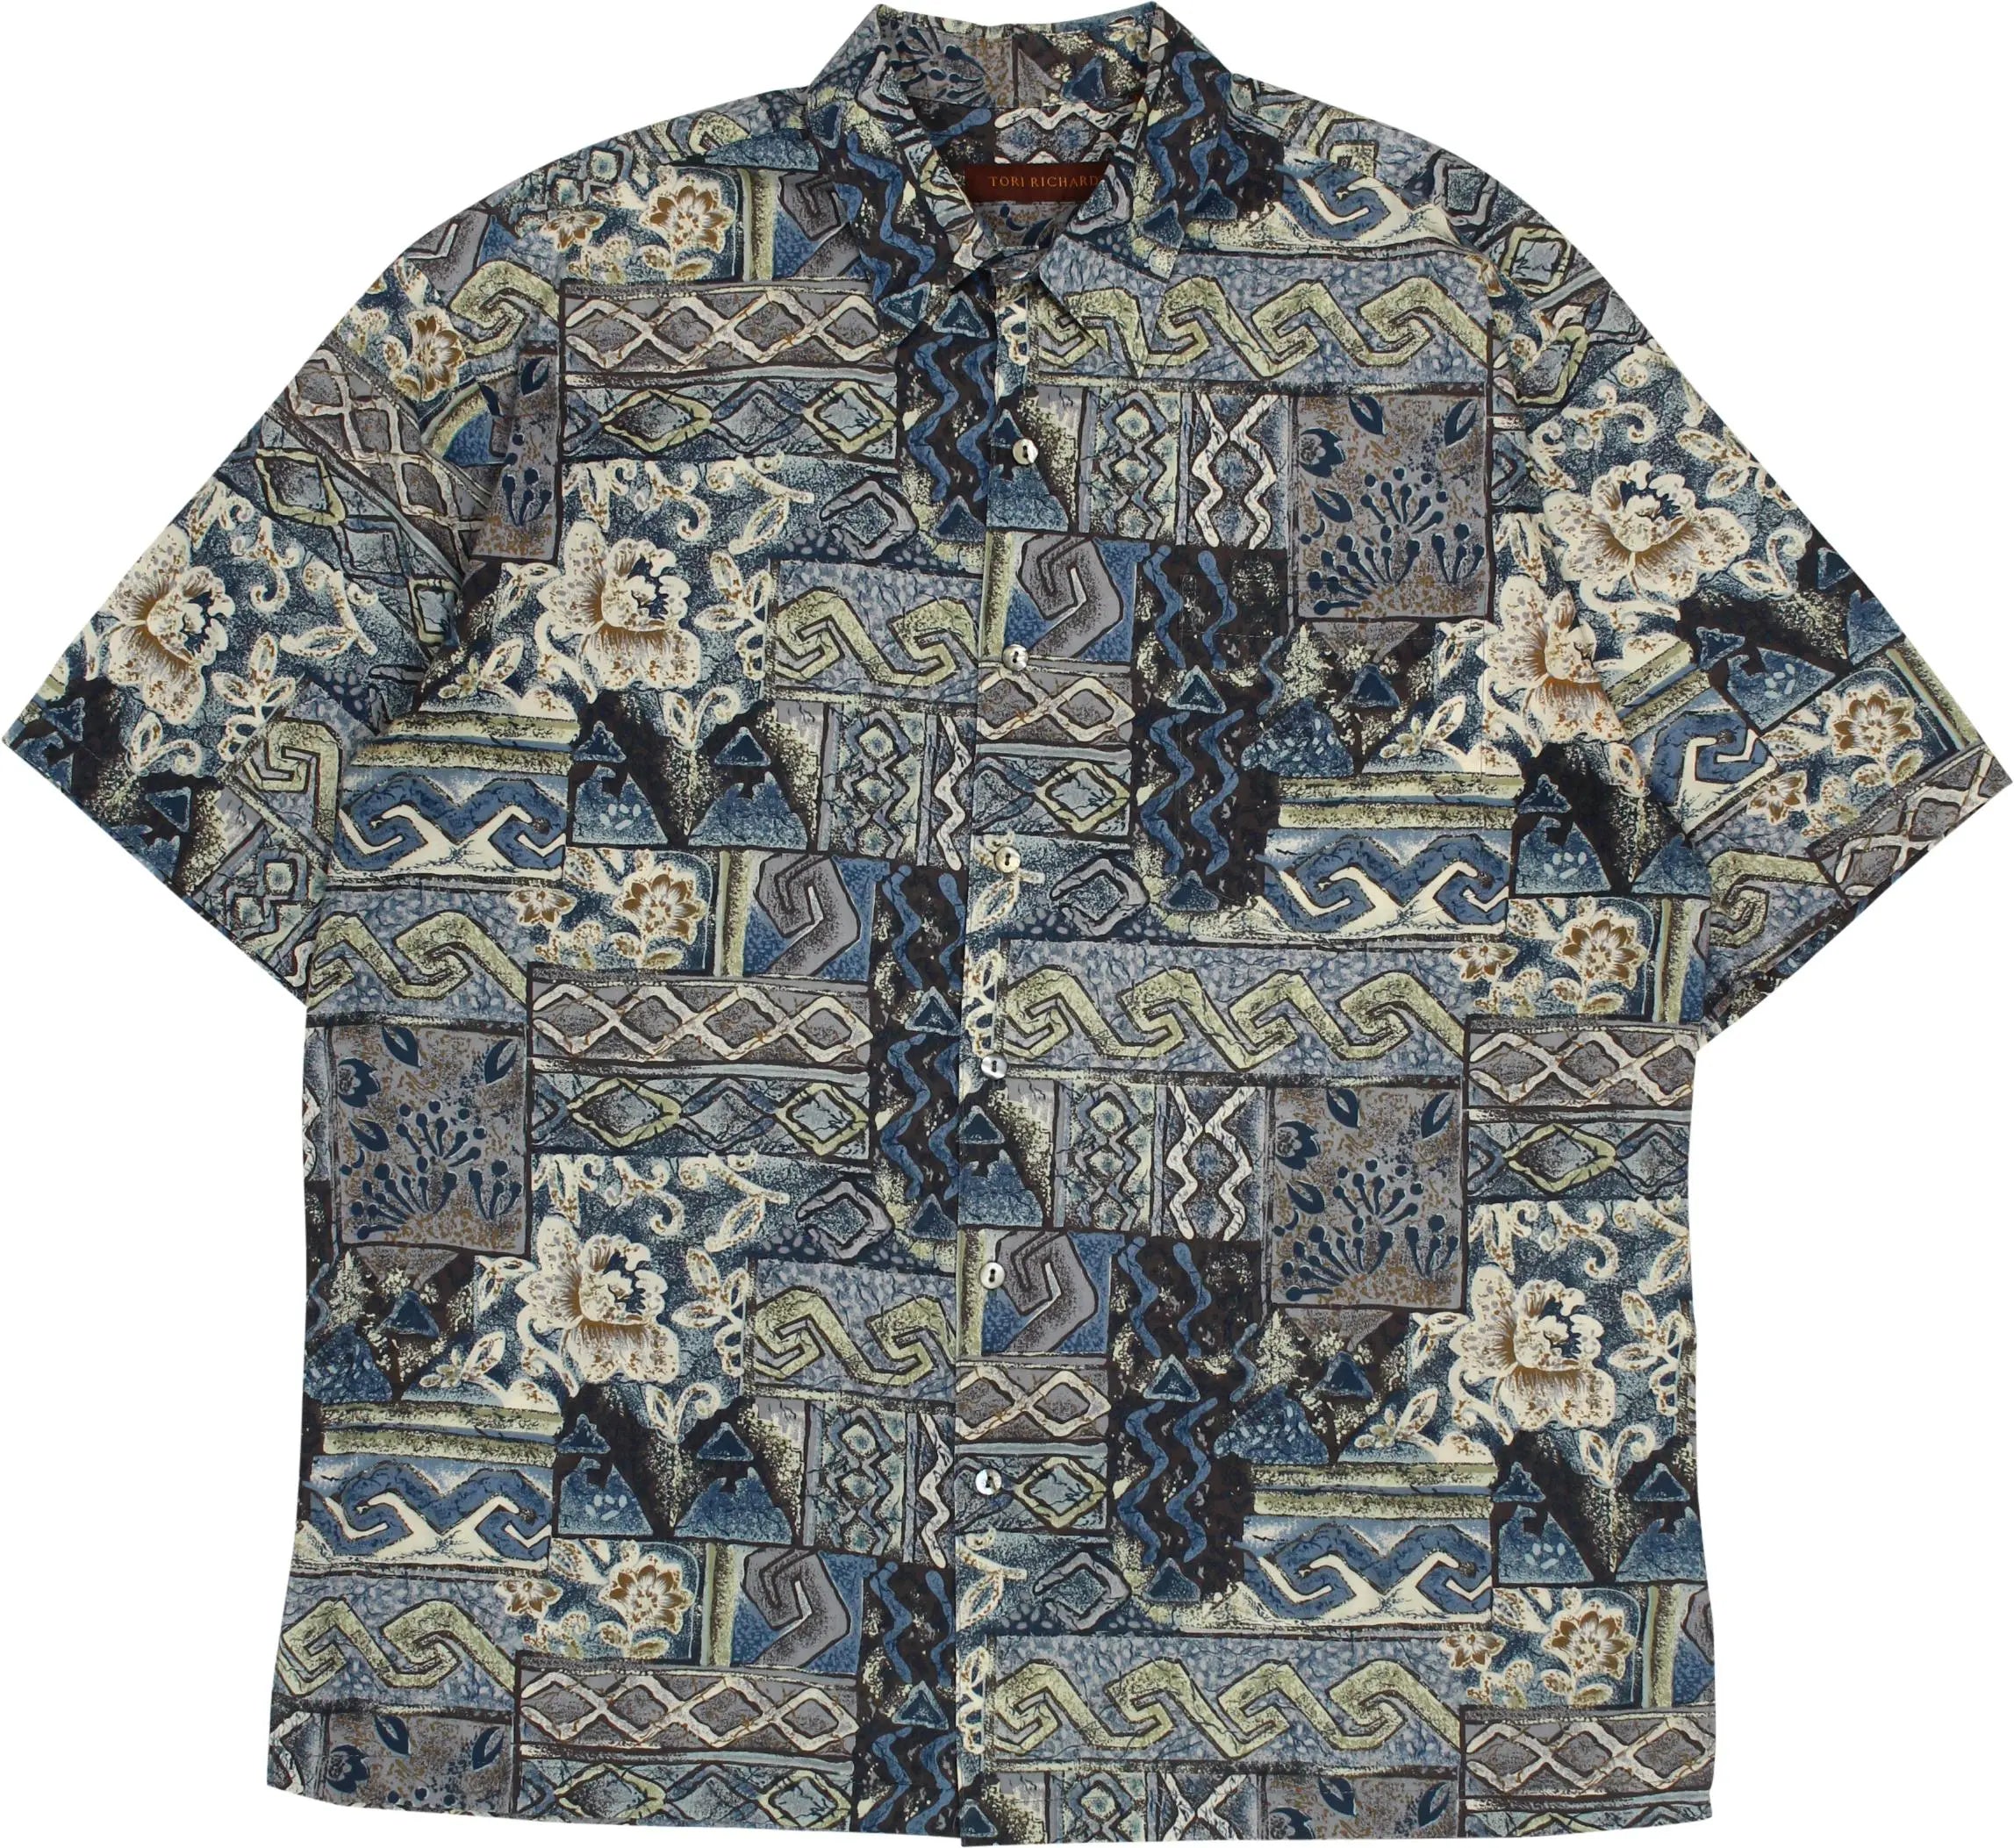 Tori Richard - 90s Hawaiian Shirt- ThriftTale.com - Vintage and second handclothing